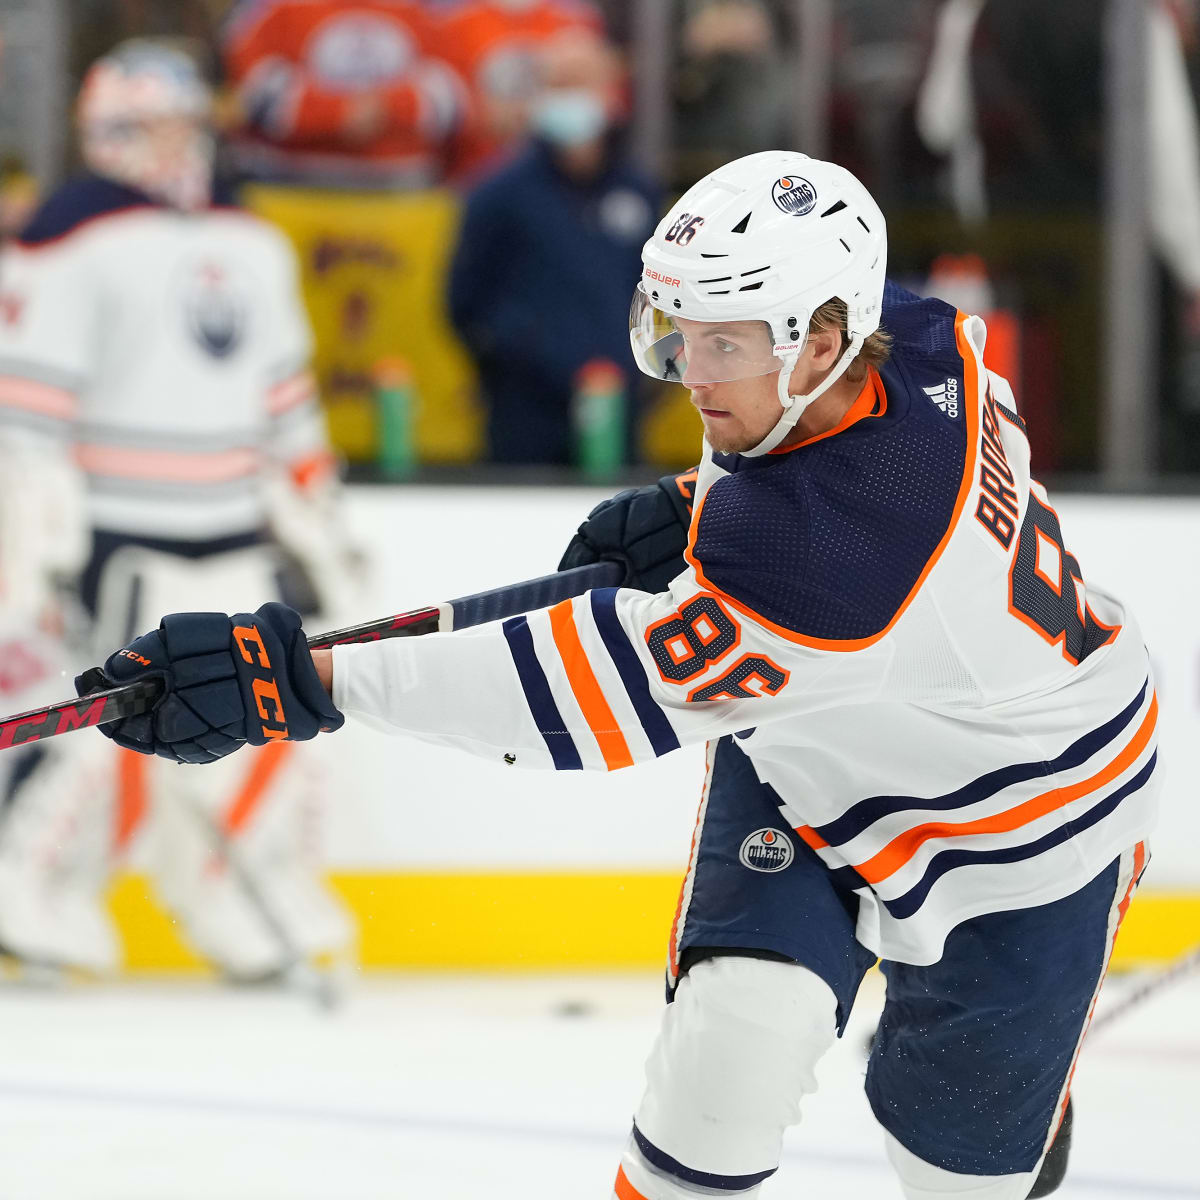 VIDEO ANALYSIS - Zack Kassian returns to Edmonton Oilers Lineup 